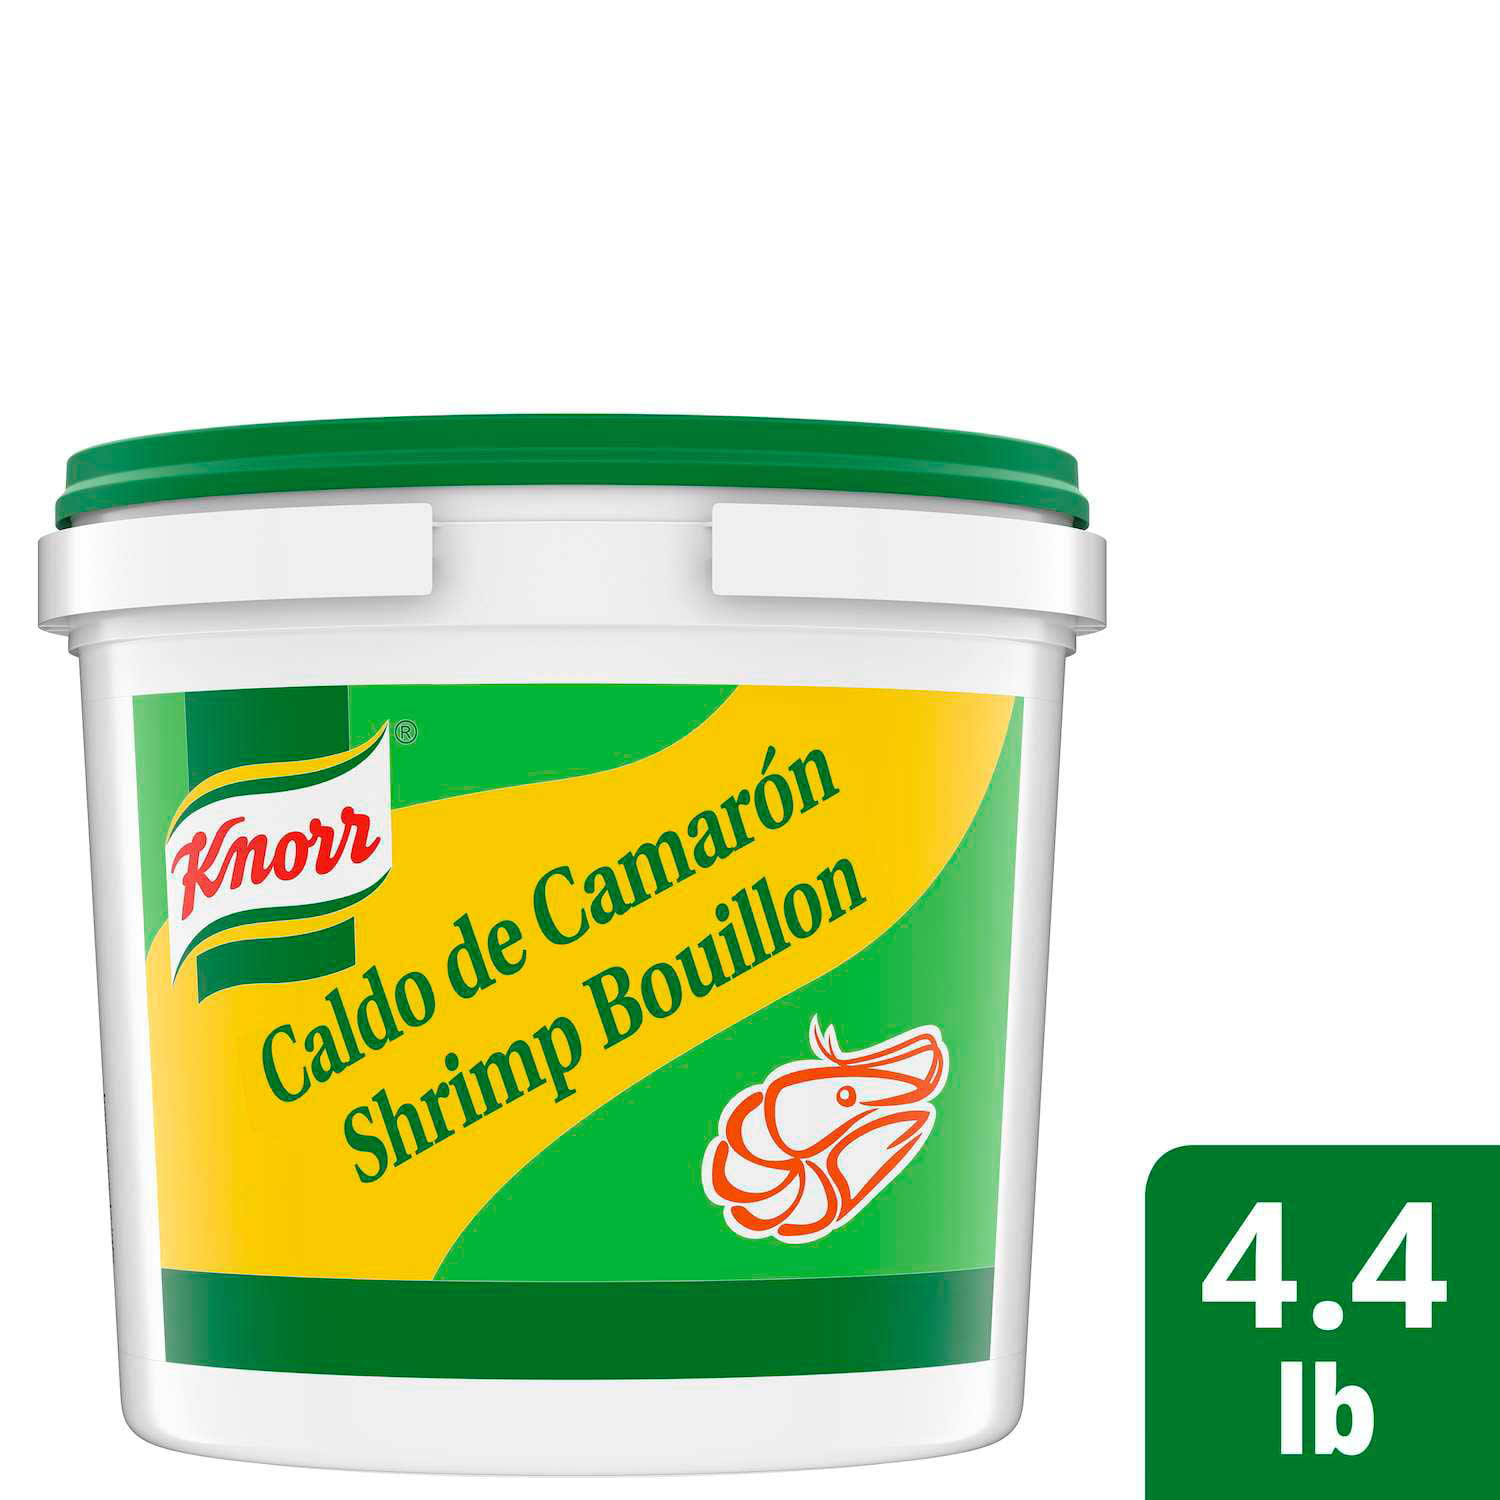 Malher Consome de Camaron (Instant Shrimp Bouillon)